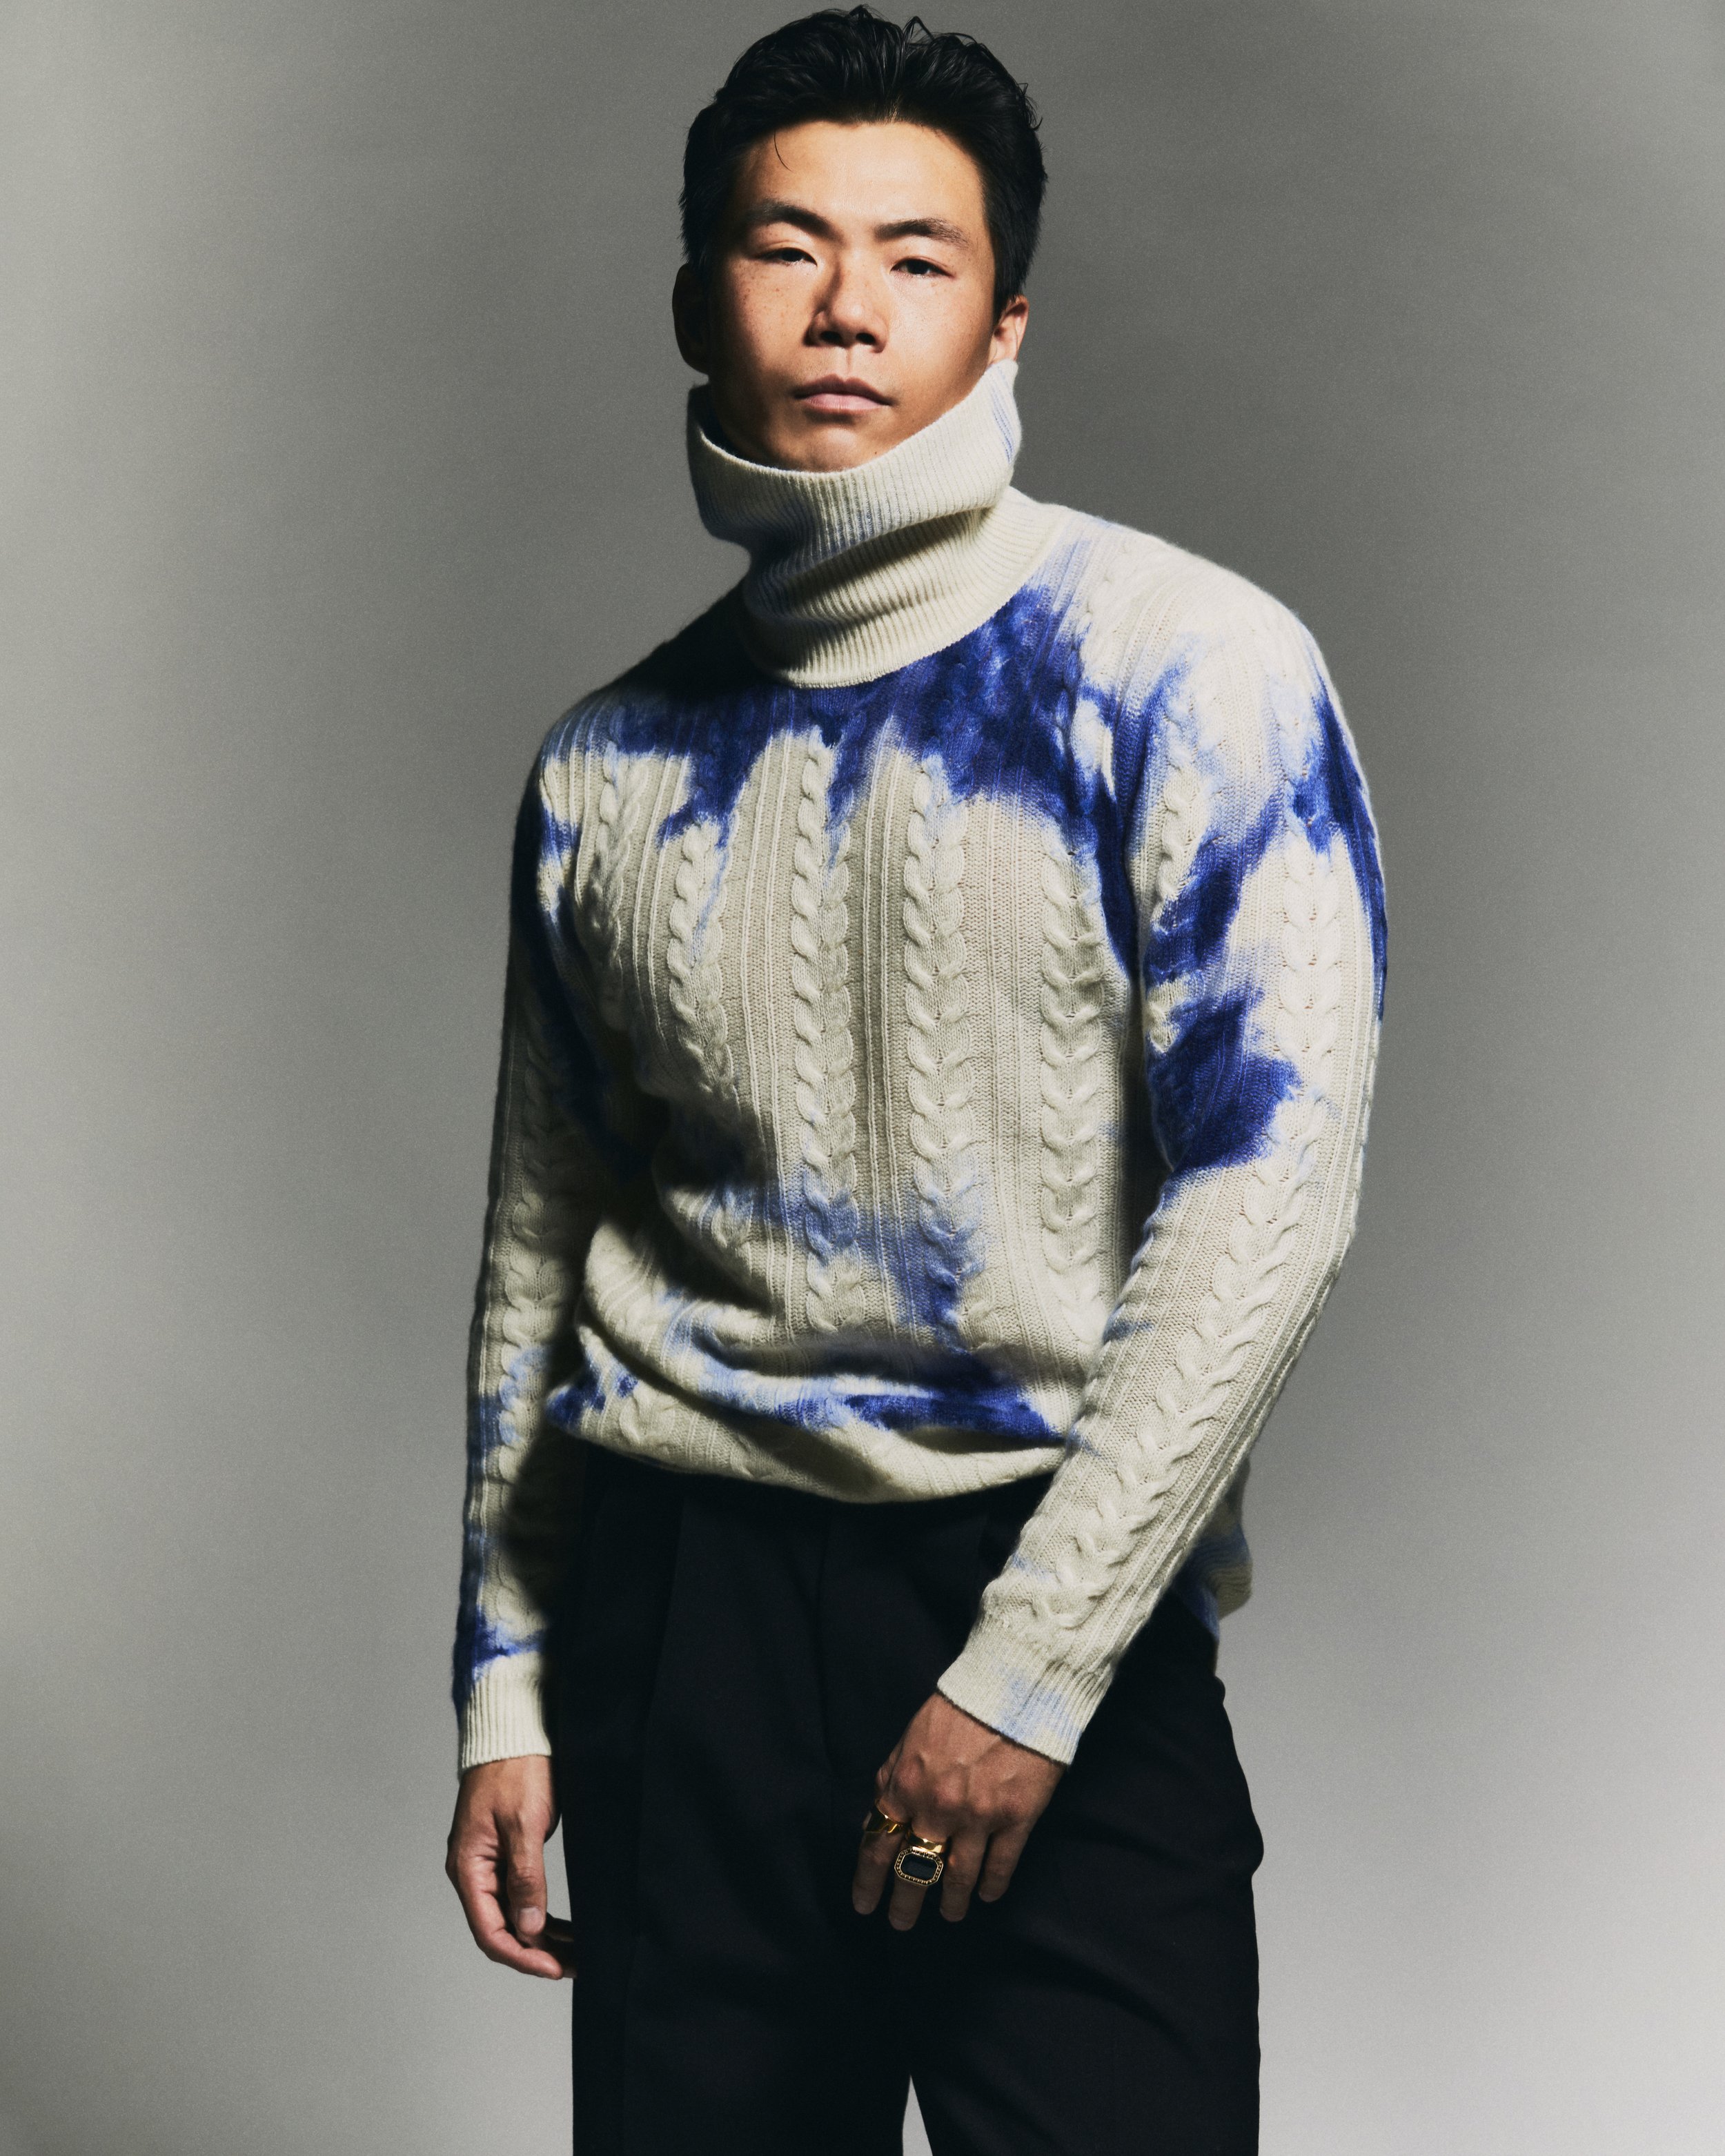 Fashion portrait of actor Ty Chen